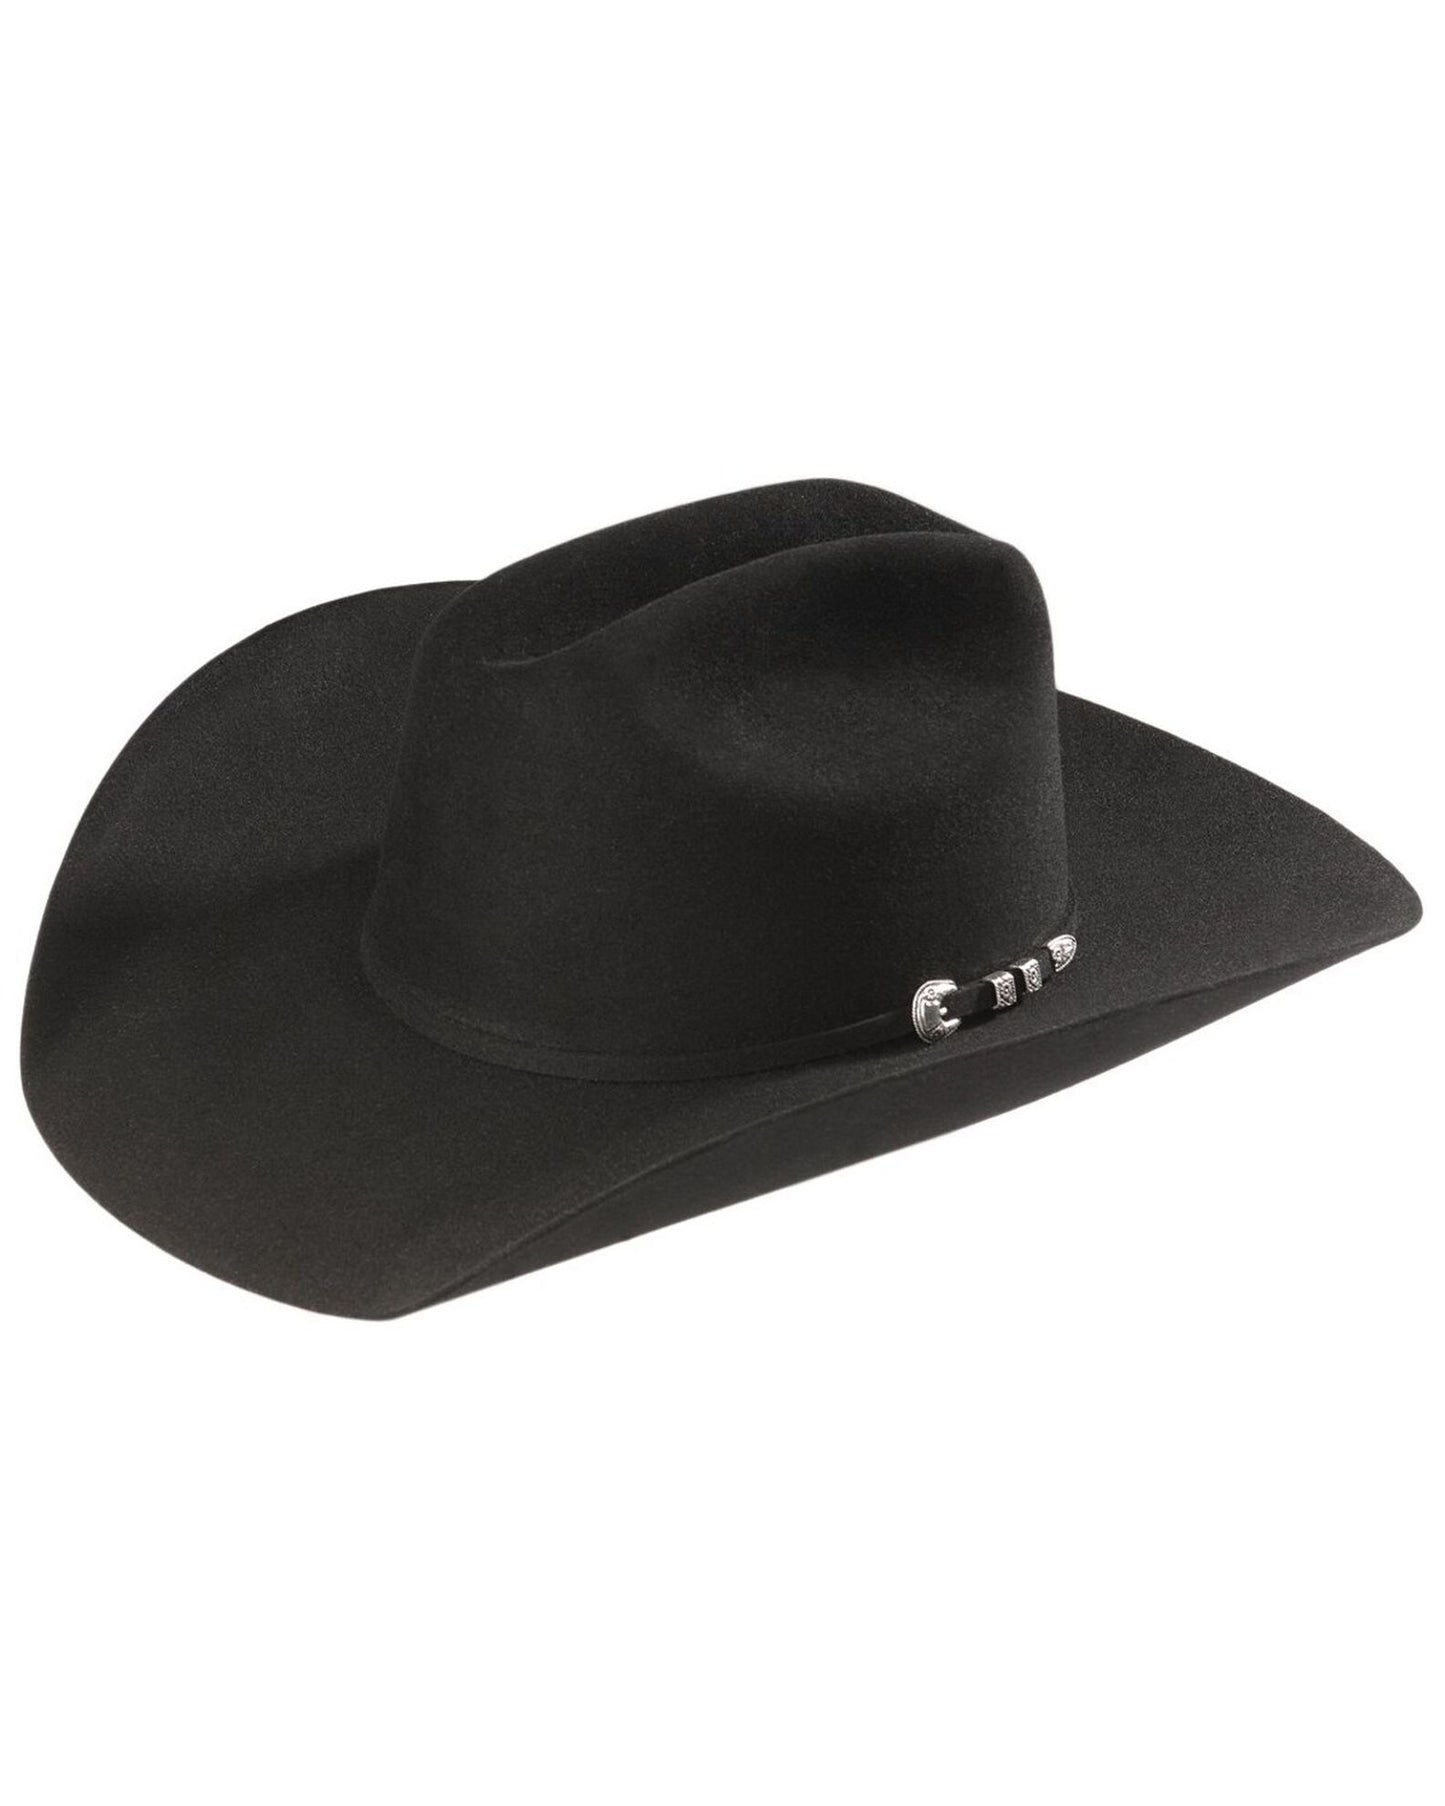 Stetson 6x Bar None Felt Cowboy Hat Black